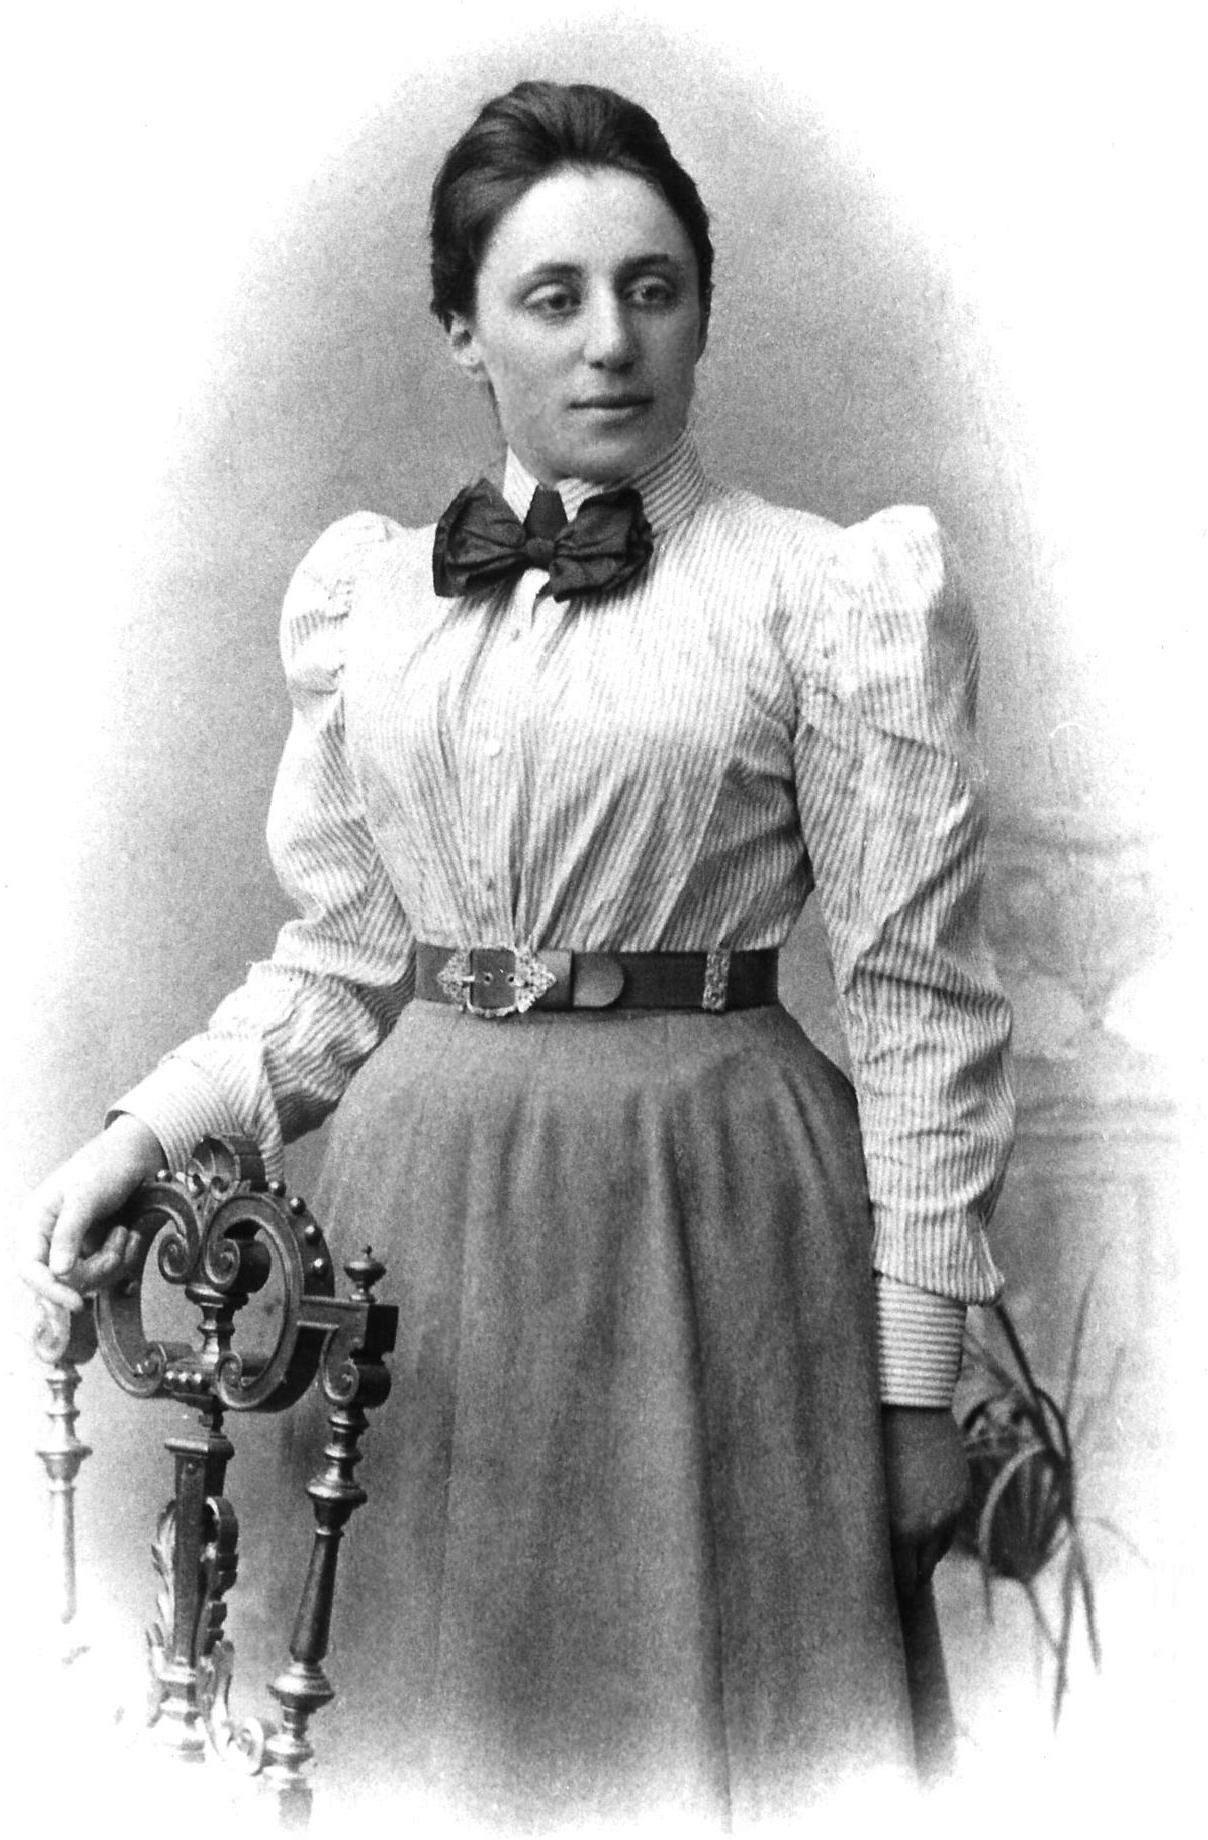 Emmy Noether (23 March 1882 – 14 April 1935)